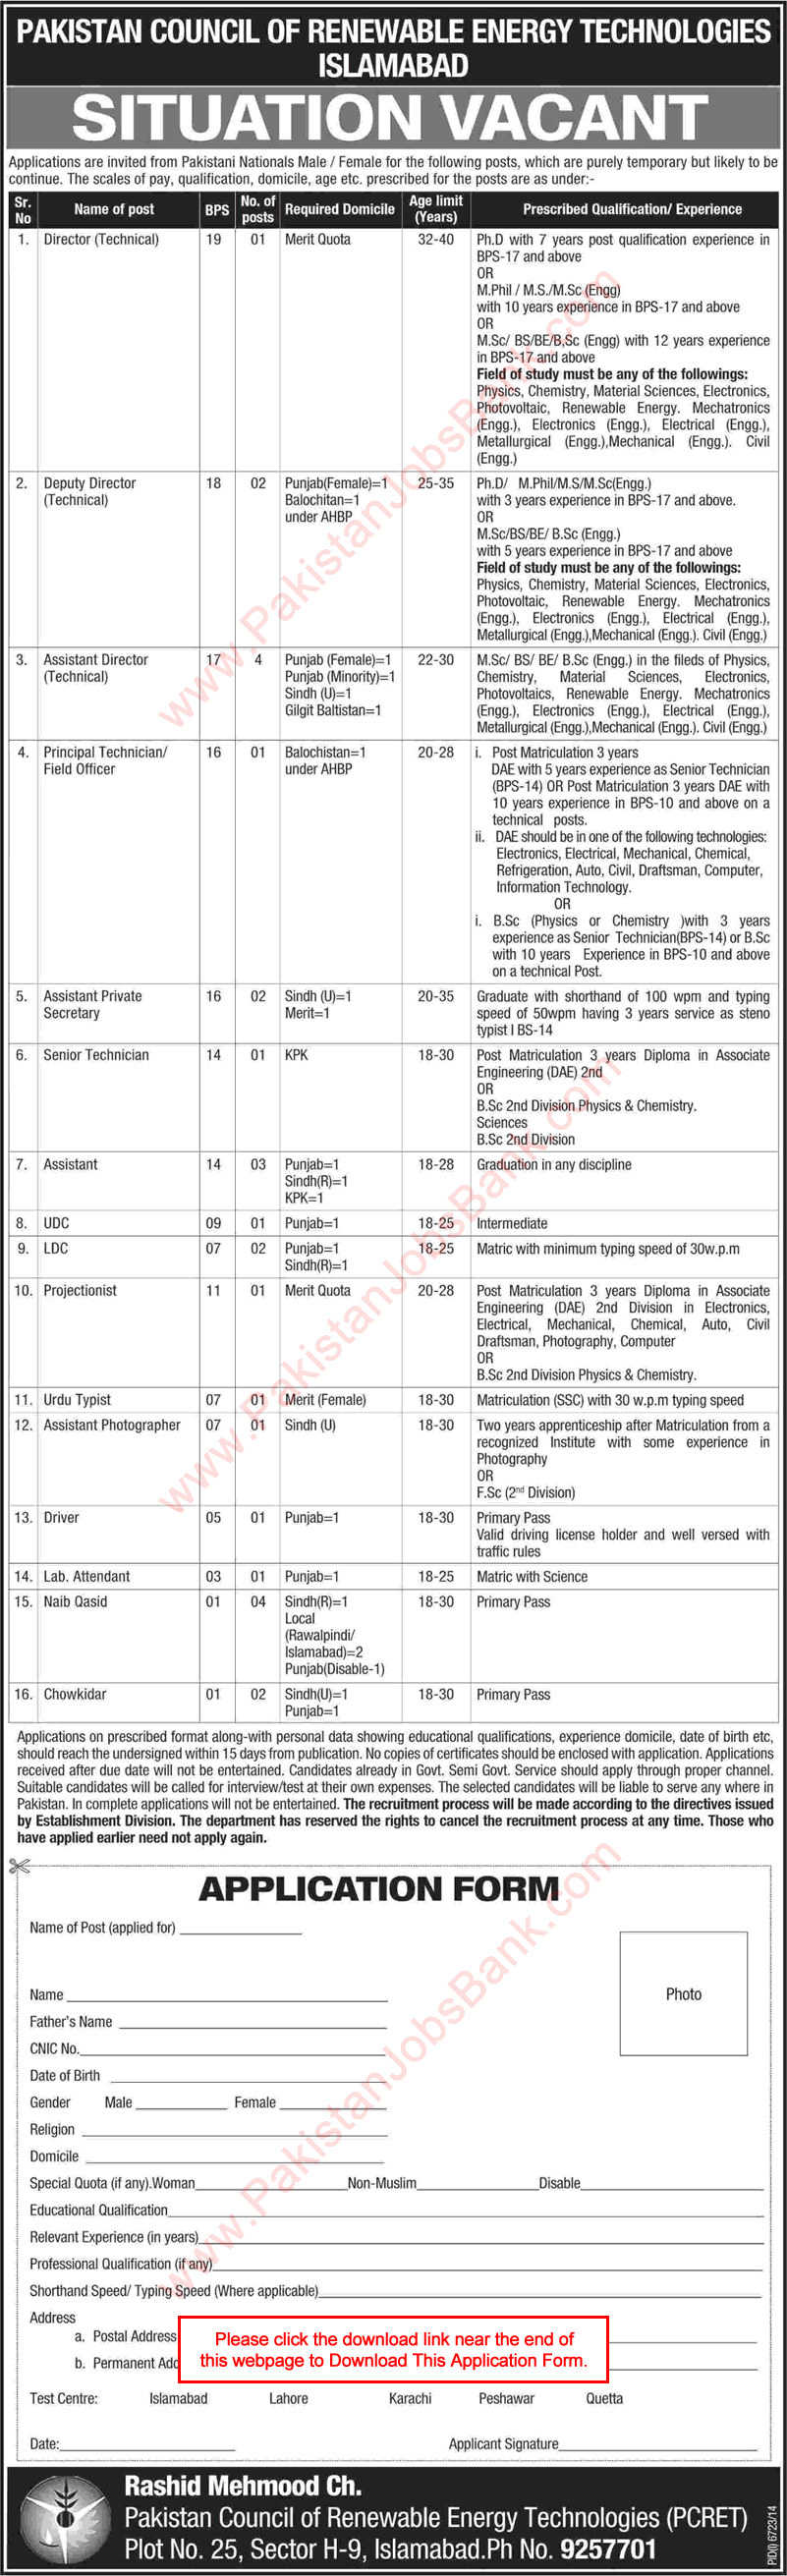 Pakistan Council of Renewable Energy Technologies Islamabad Jobs 2015 June PCRET Application Form